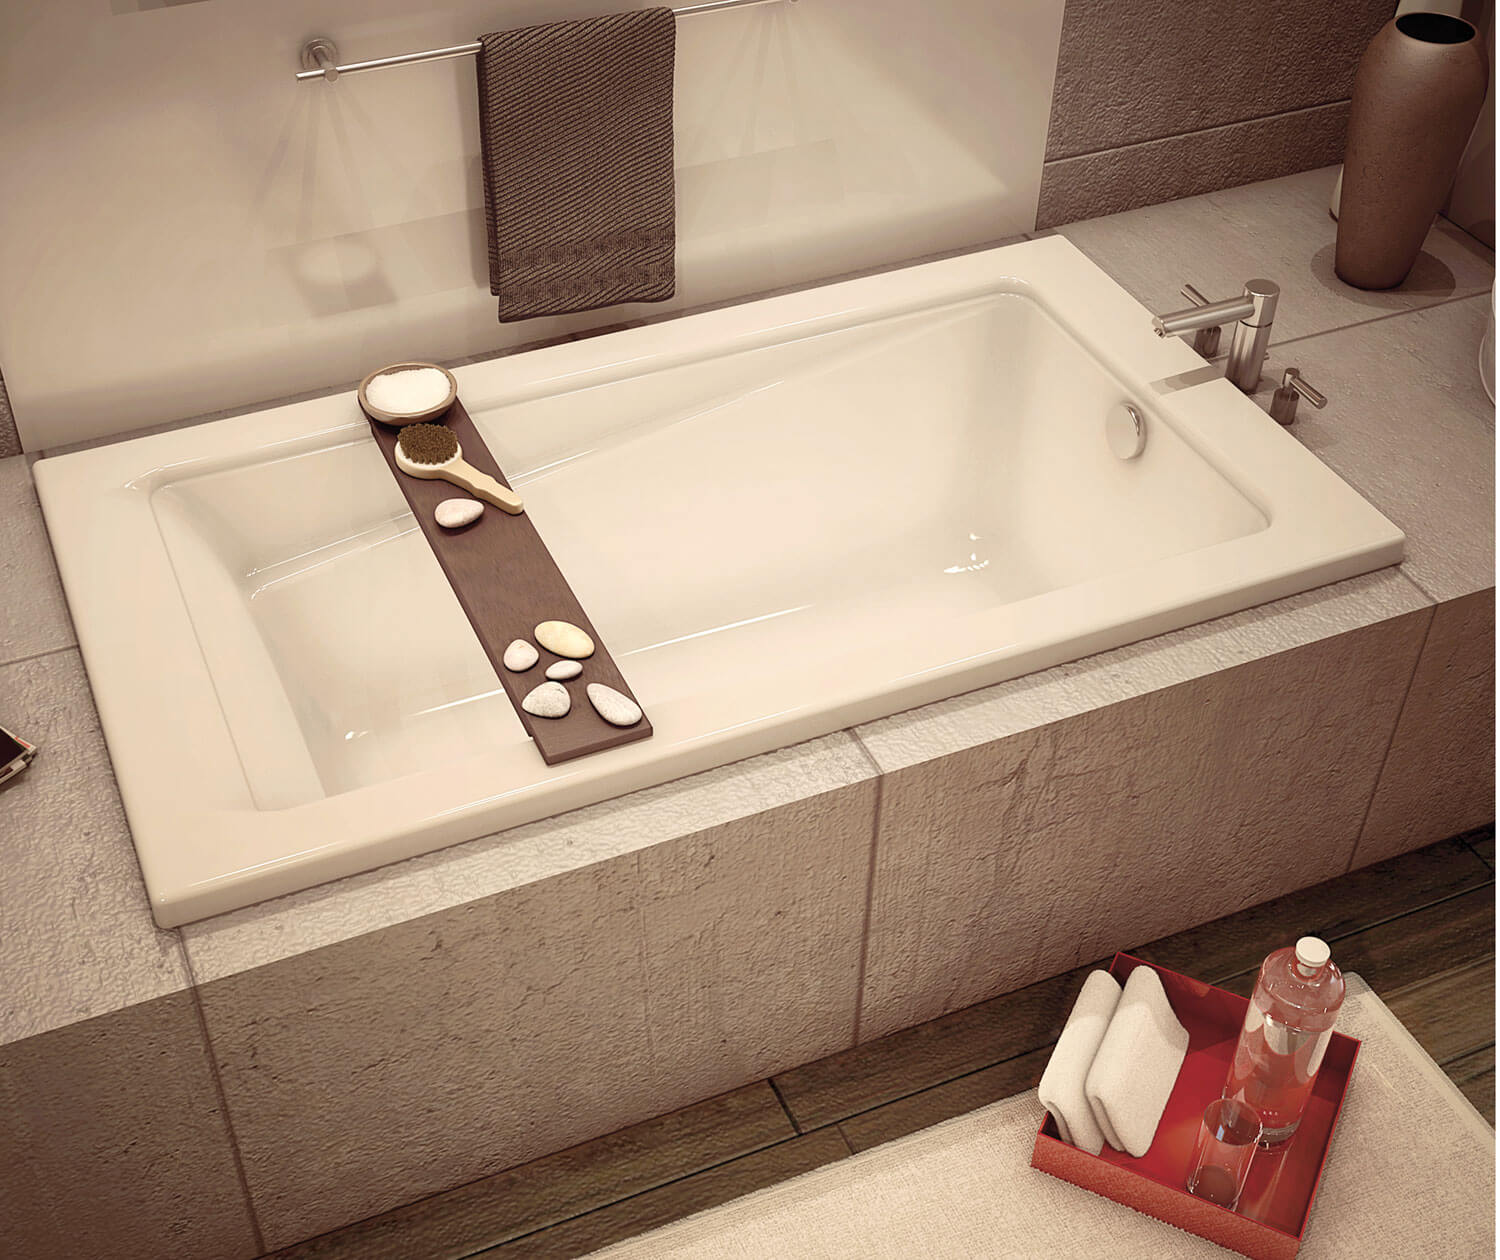 New Town 6032 Acrylic Drop-in End Drain Bathtub in White | Bath